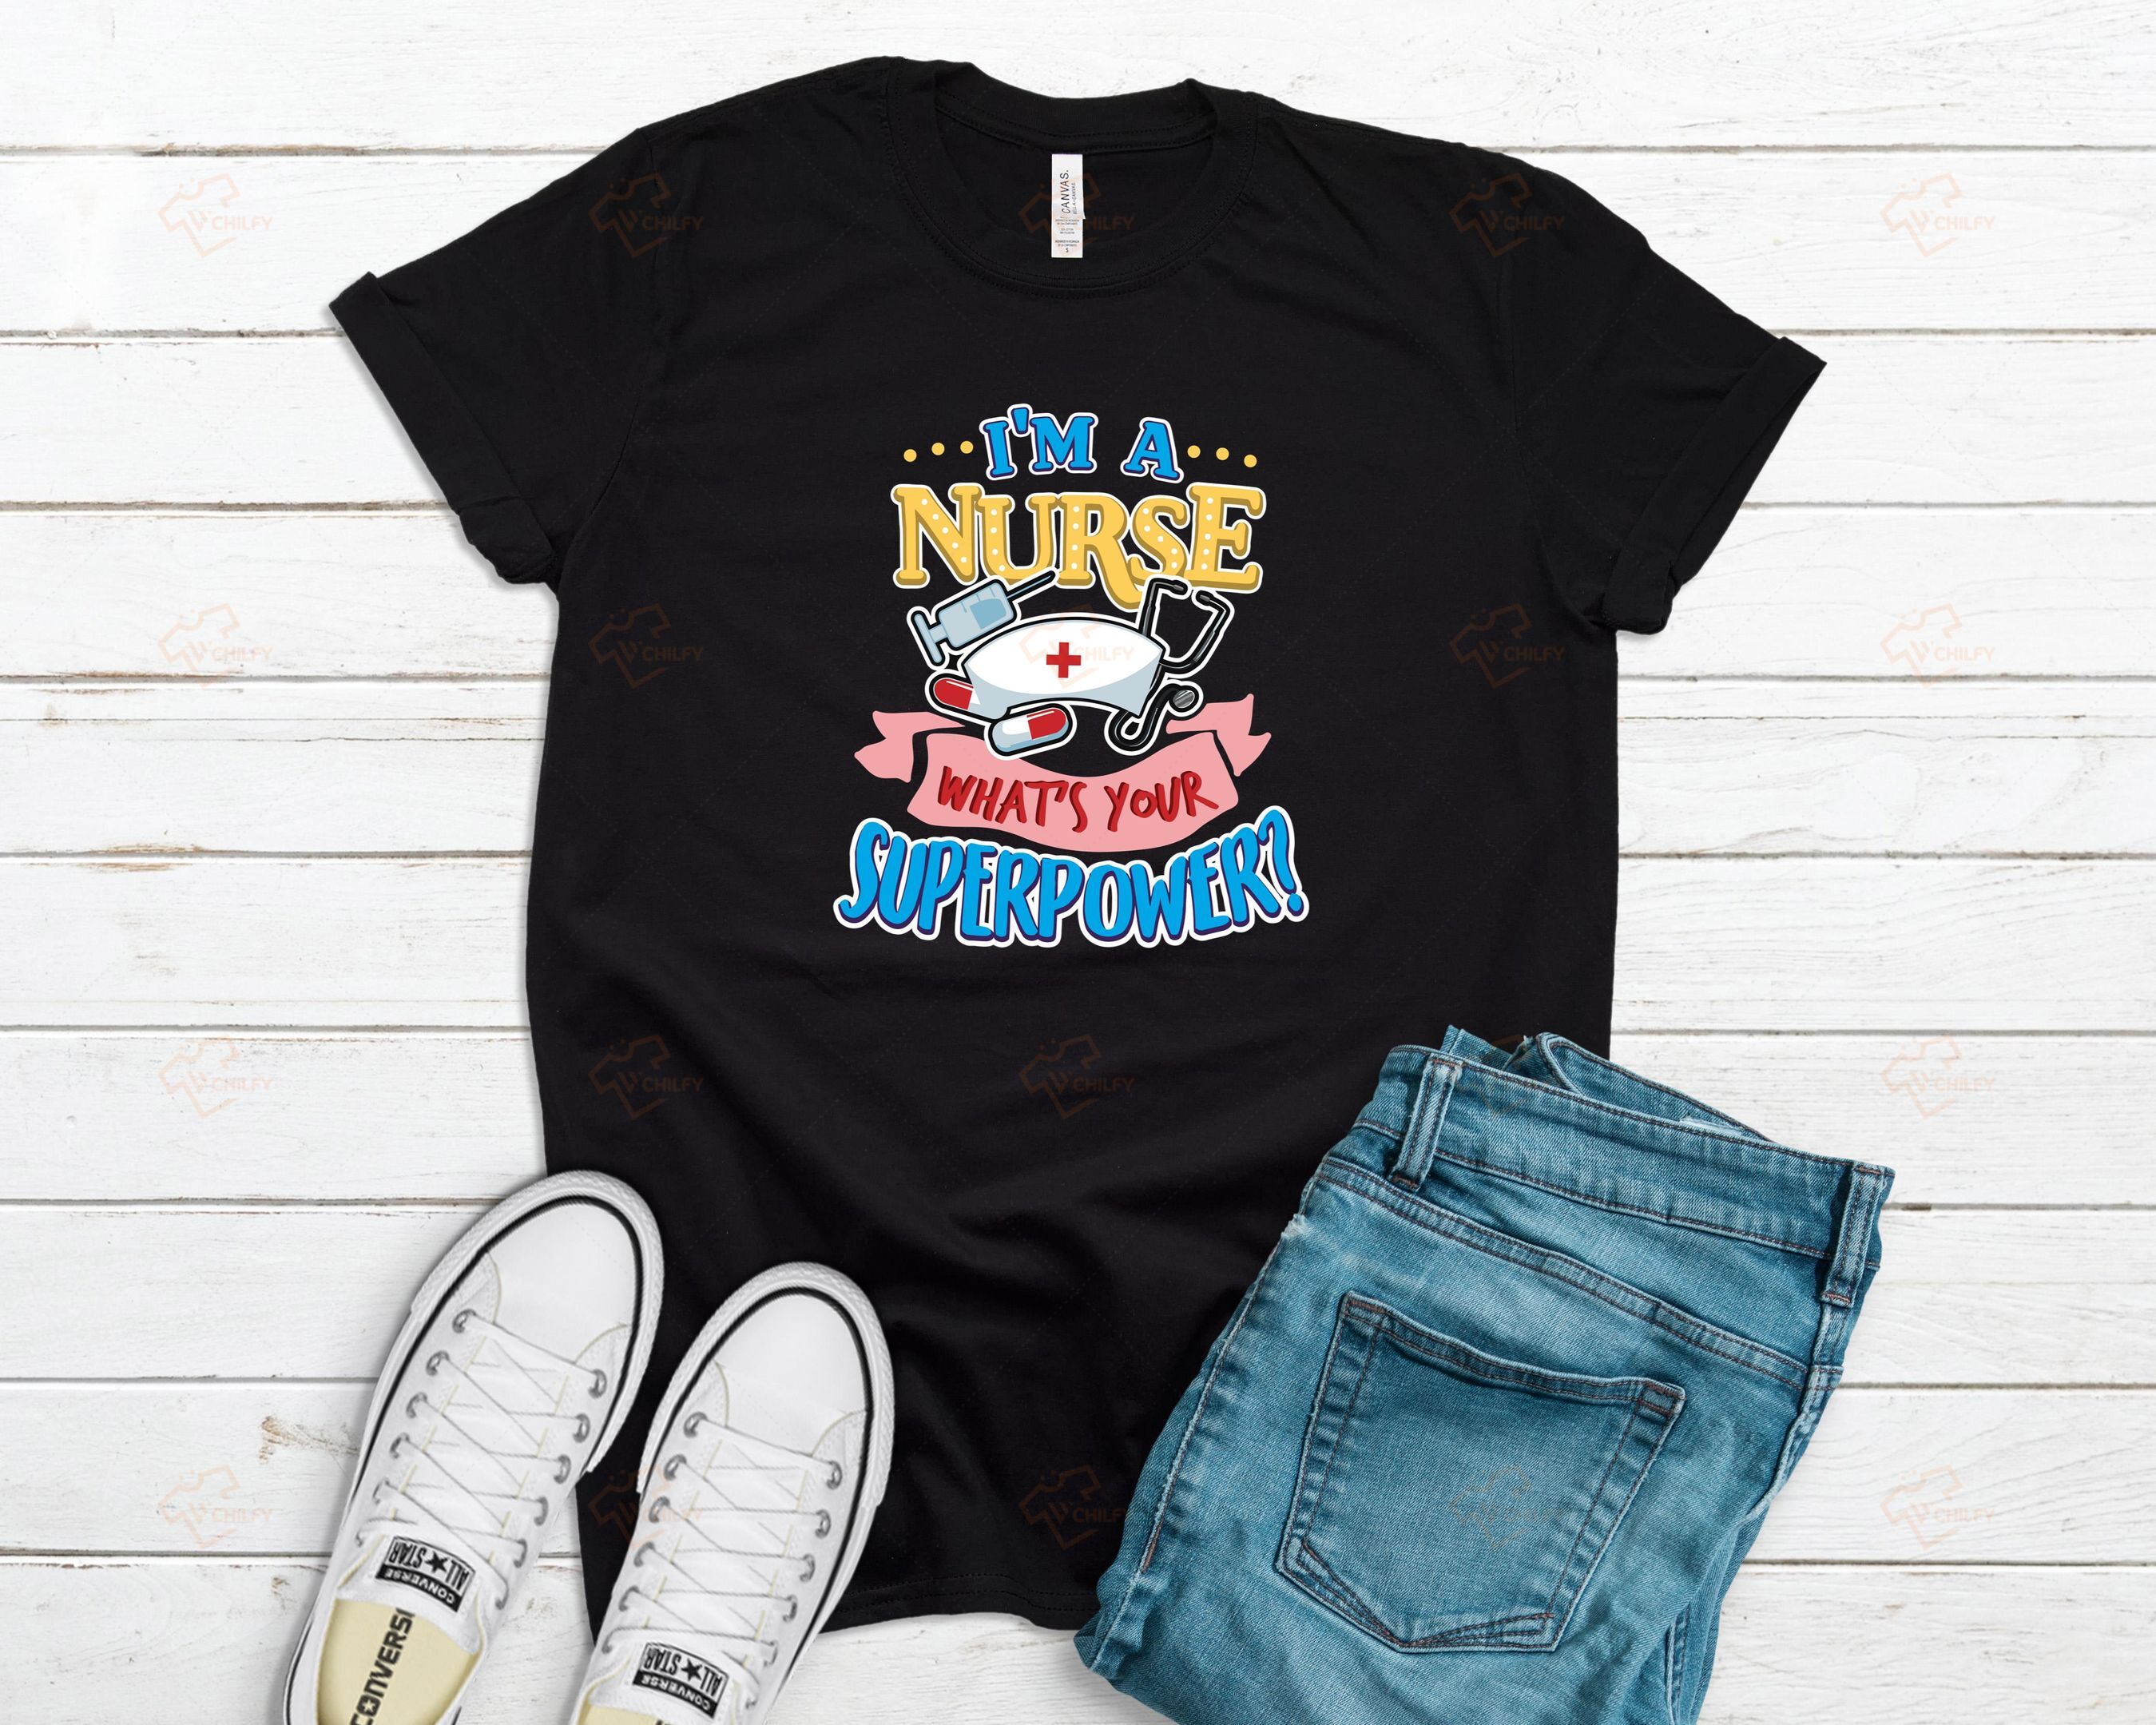 Nurse Superpower Shirt, Cute Funny Nurse Gift, Med Student Gift, Registered Nurse Tee